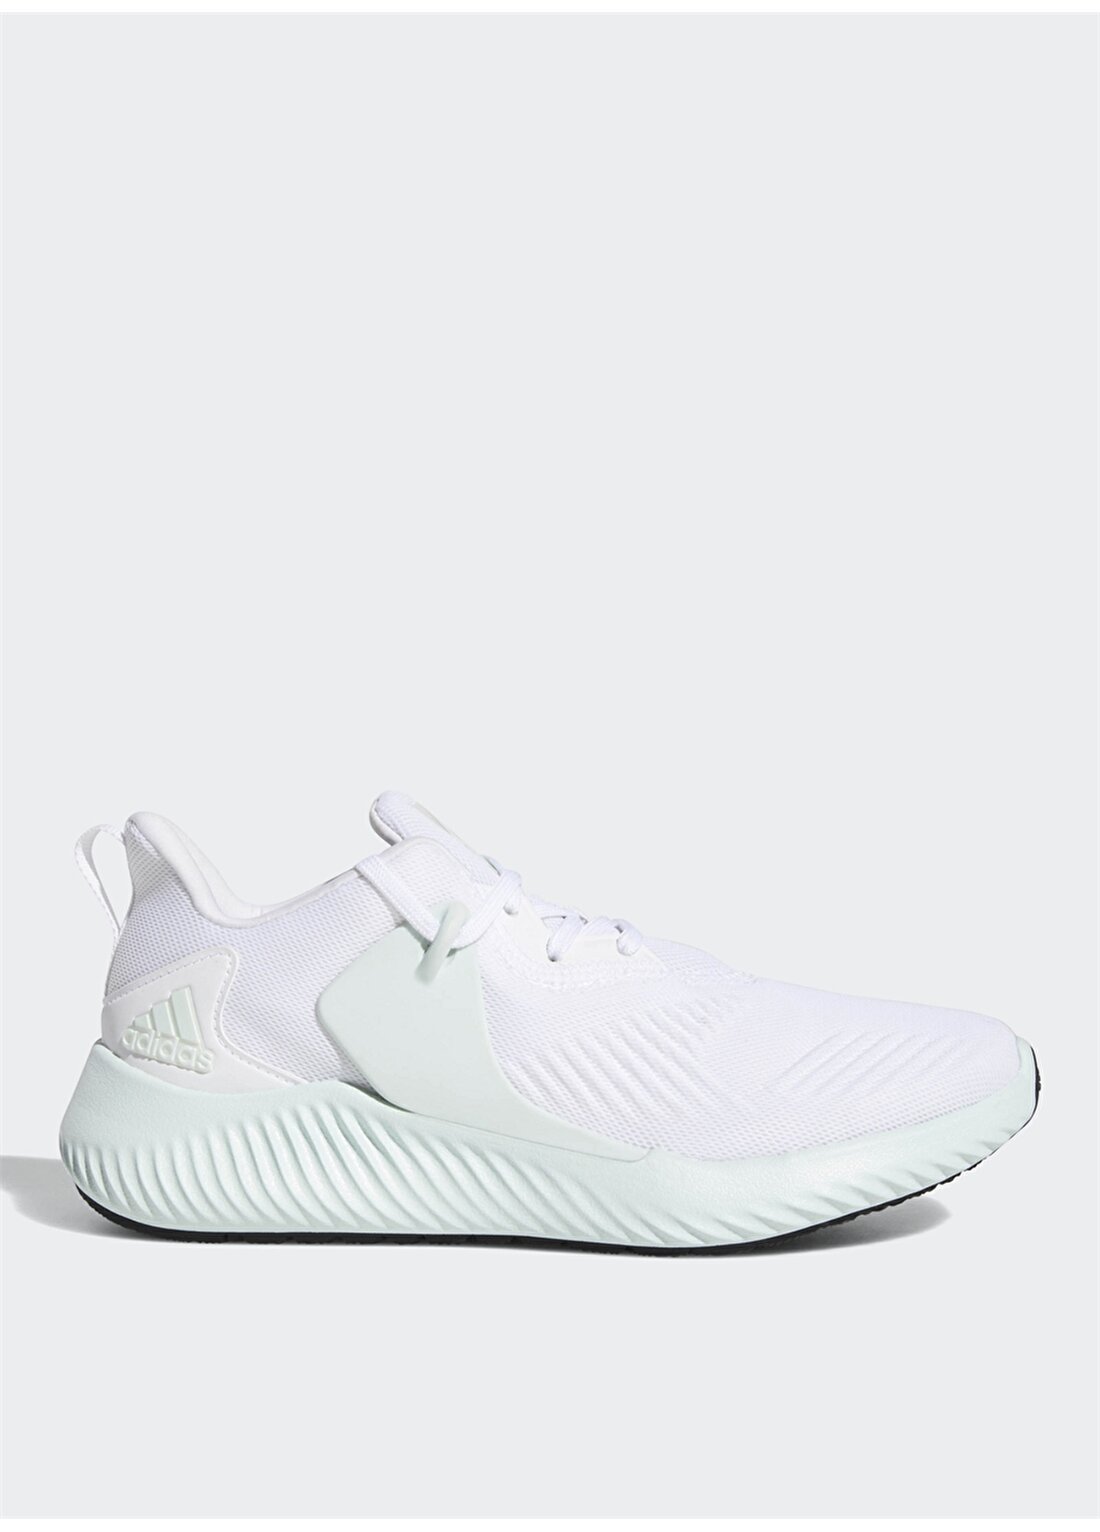 Adidas Alphabounce Rc 2 Koşu Ayakkabısı